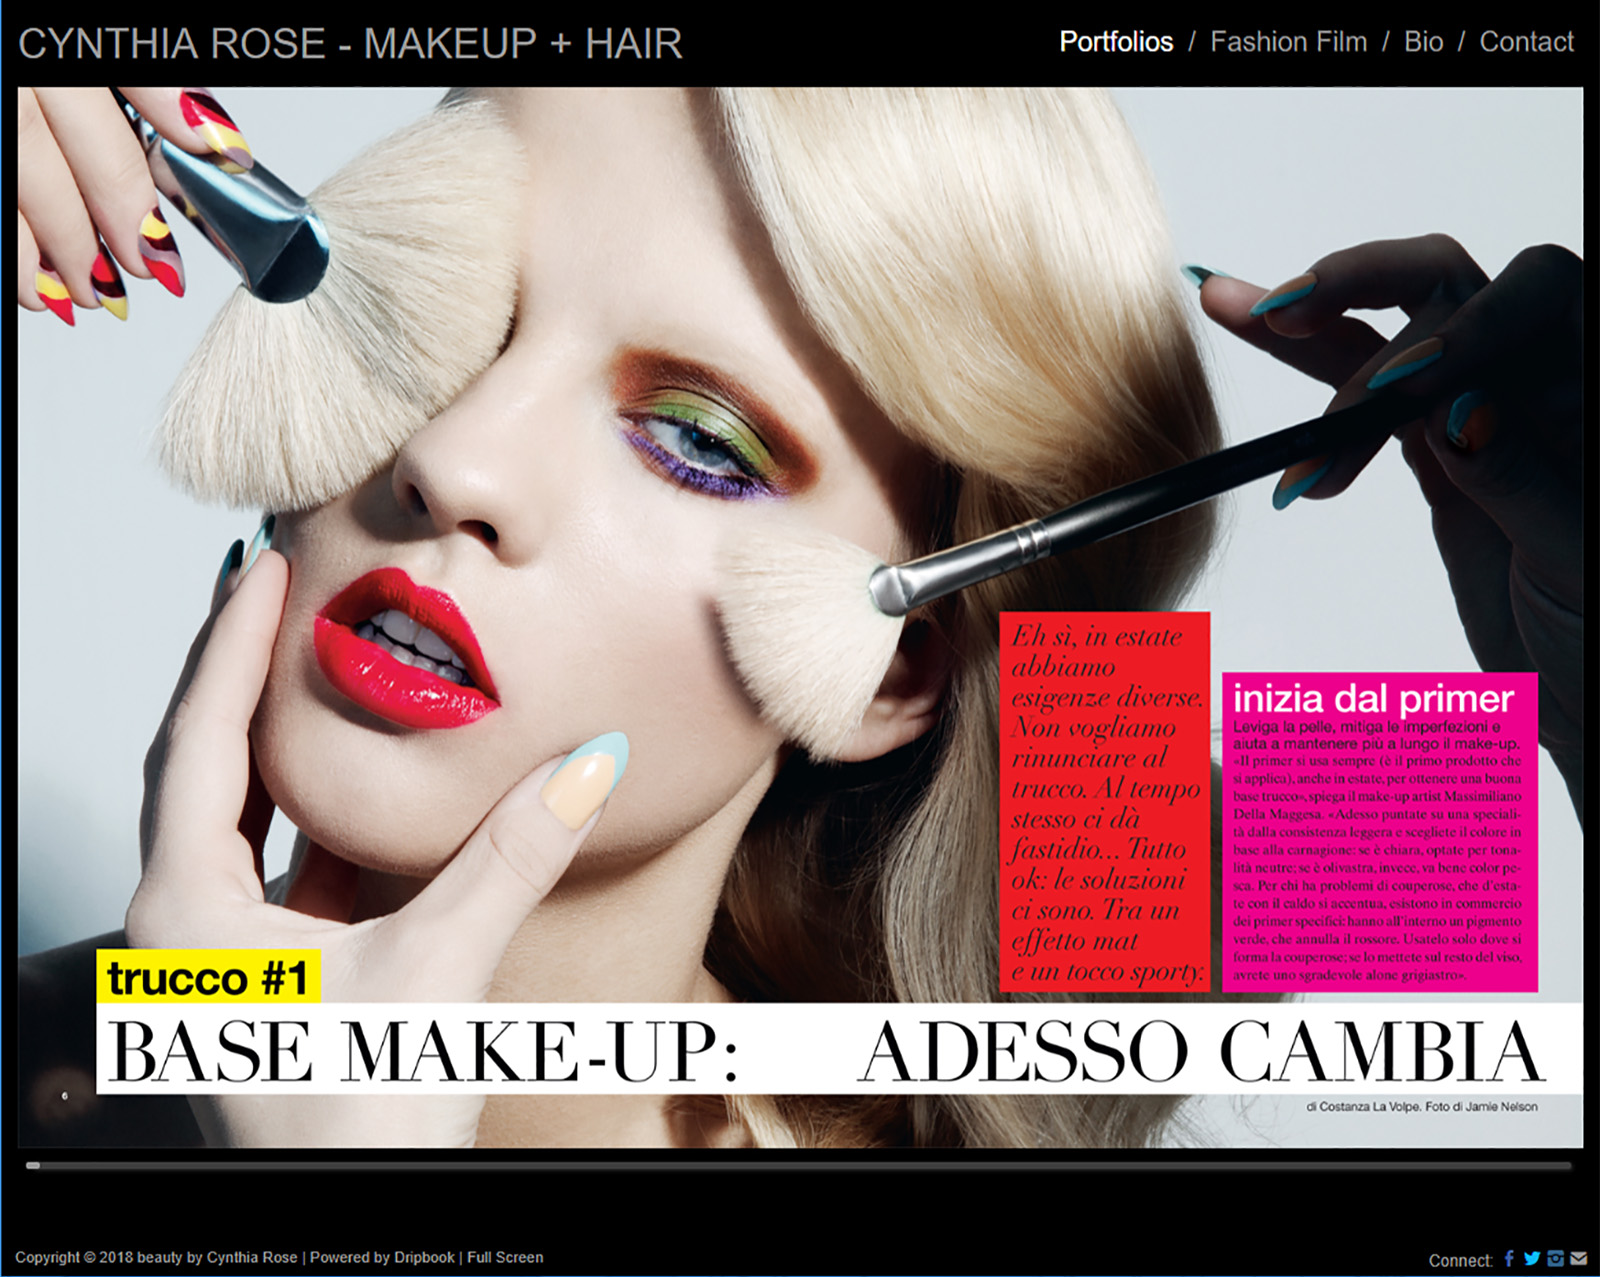 screen capture of makeup & hair artist Cynthia Rose's website